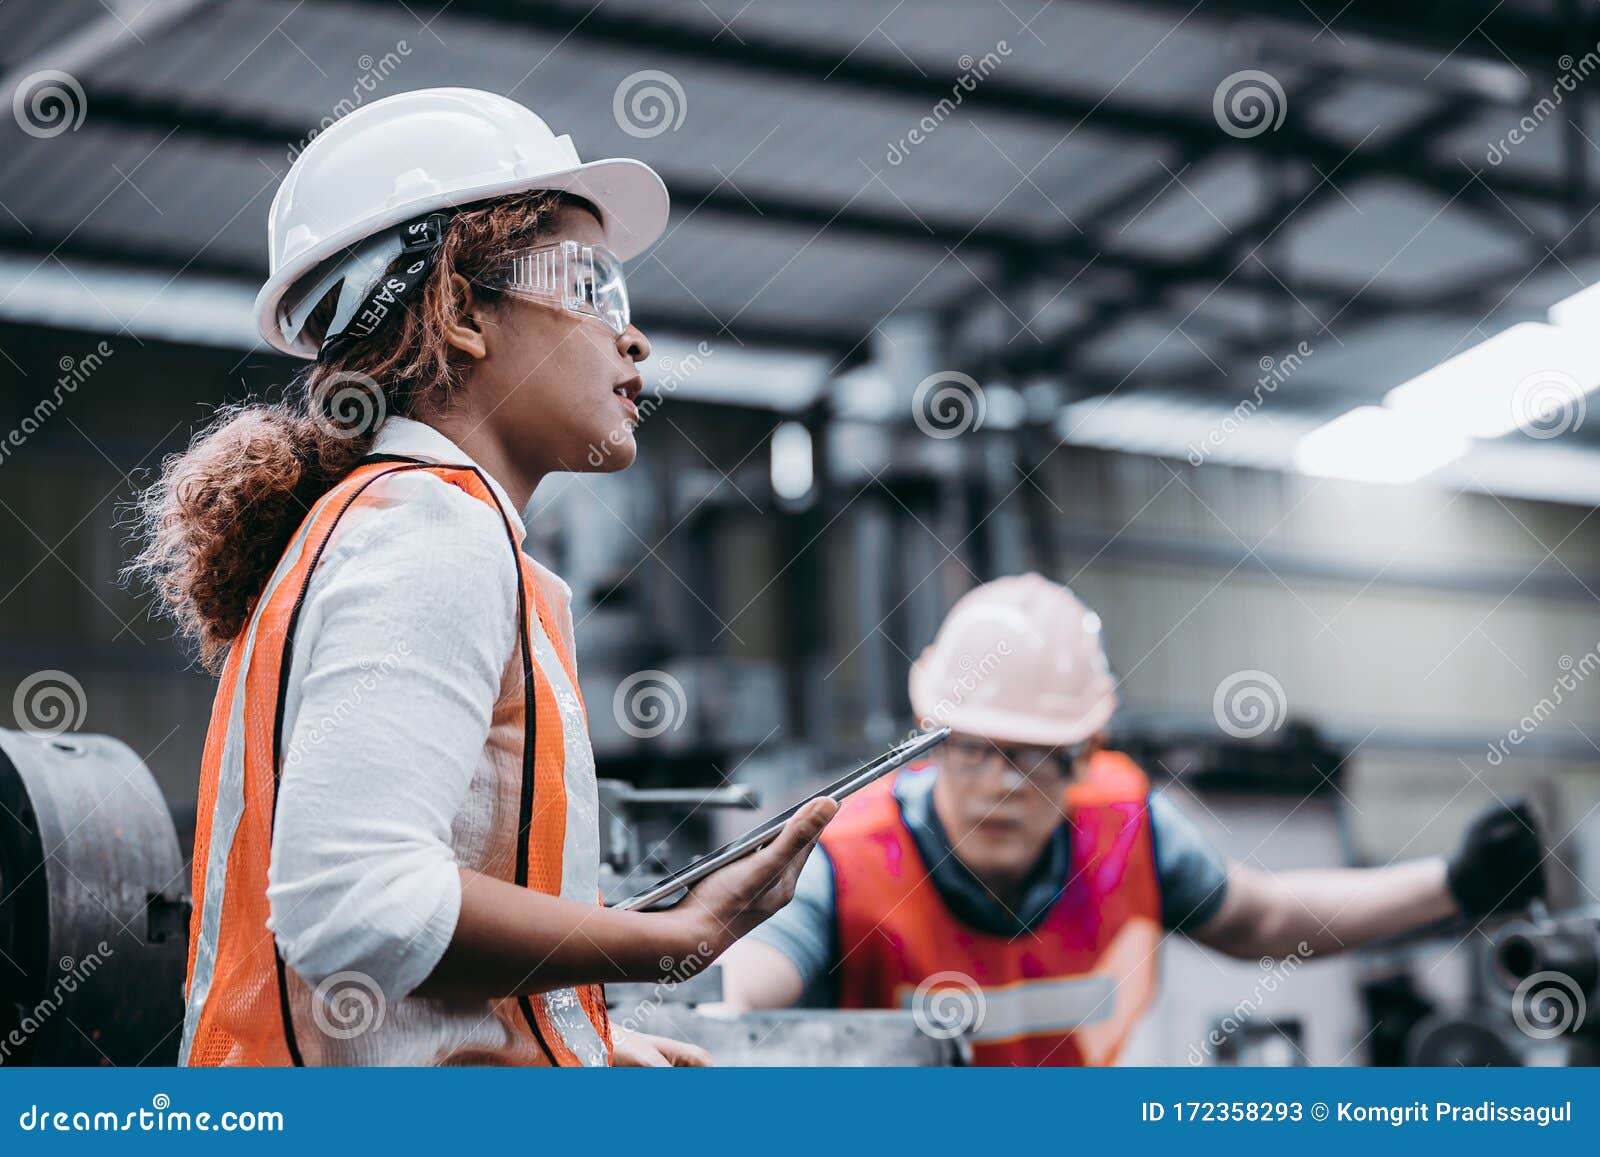 female industrial engineer wearing a white helmet while